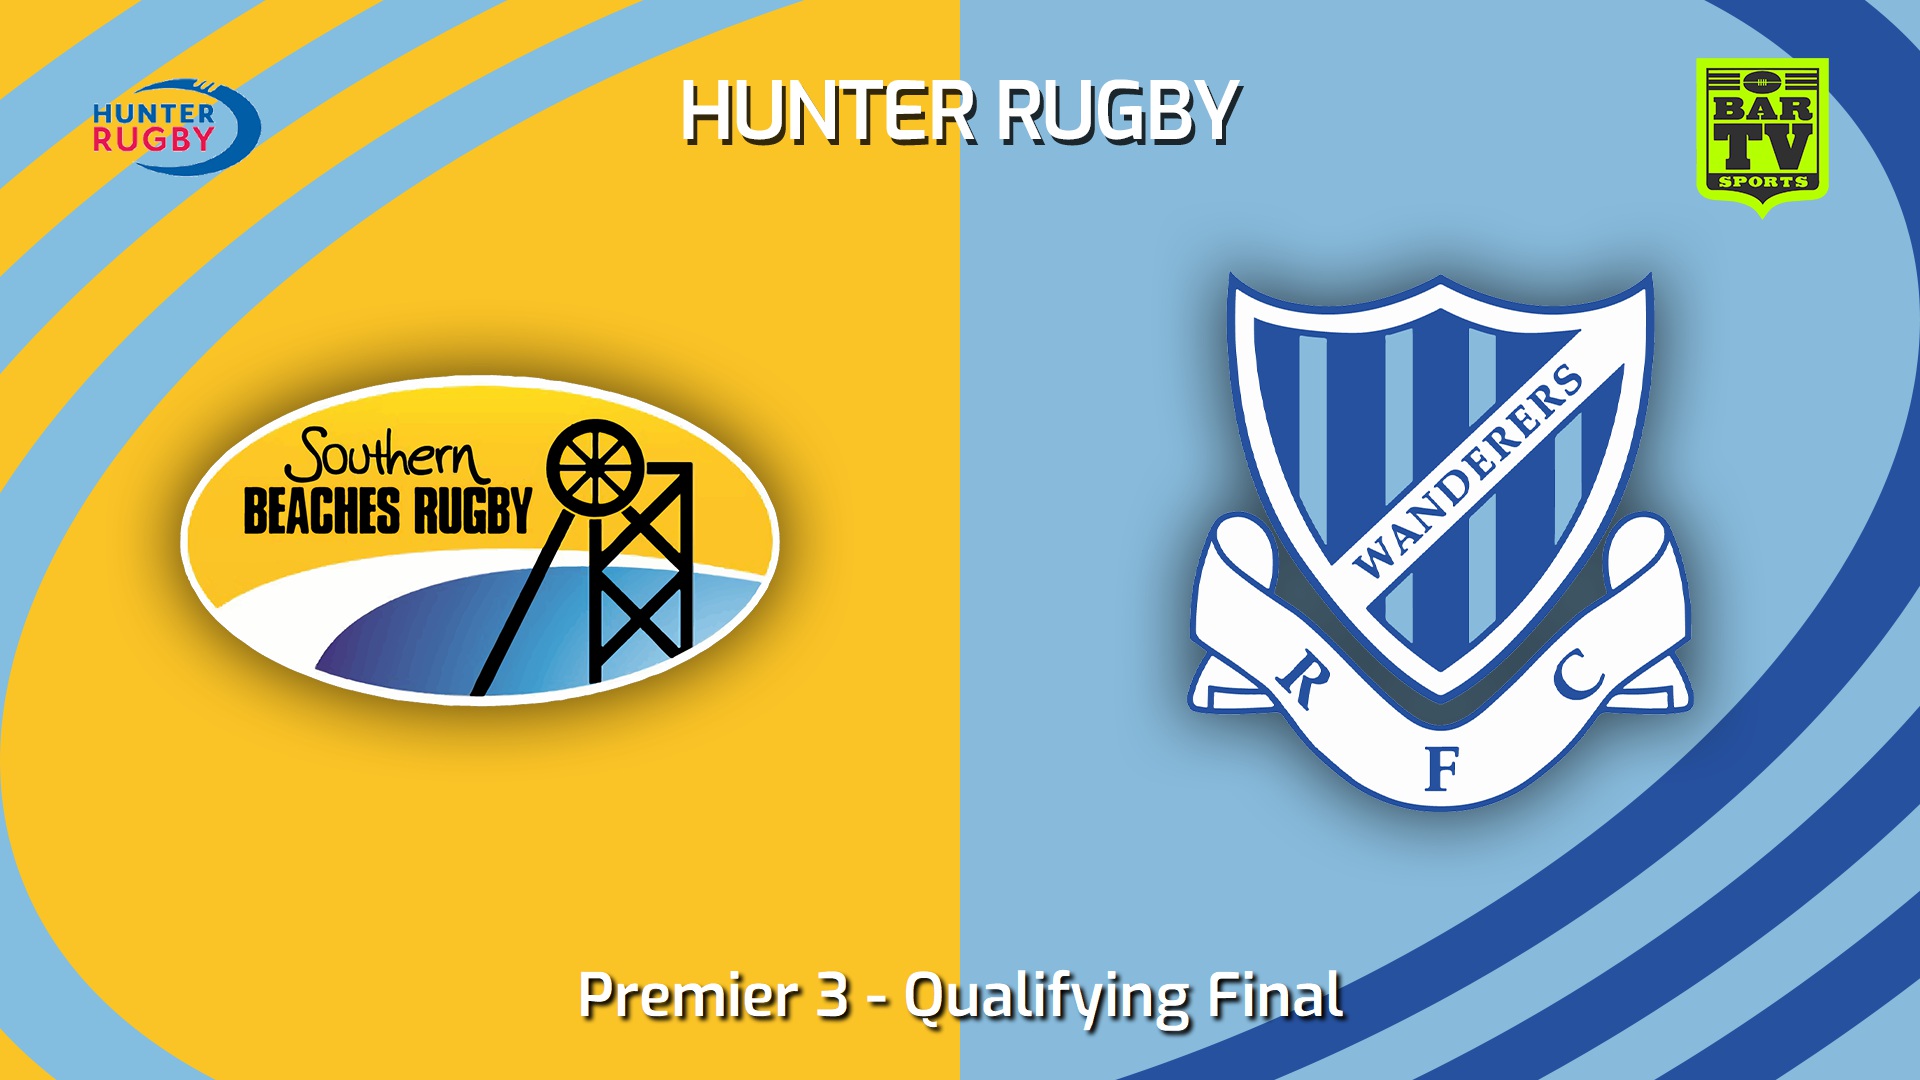 Hunter Rugby Qualifying Final - Premier 3